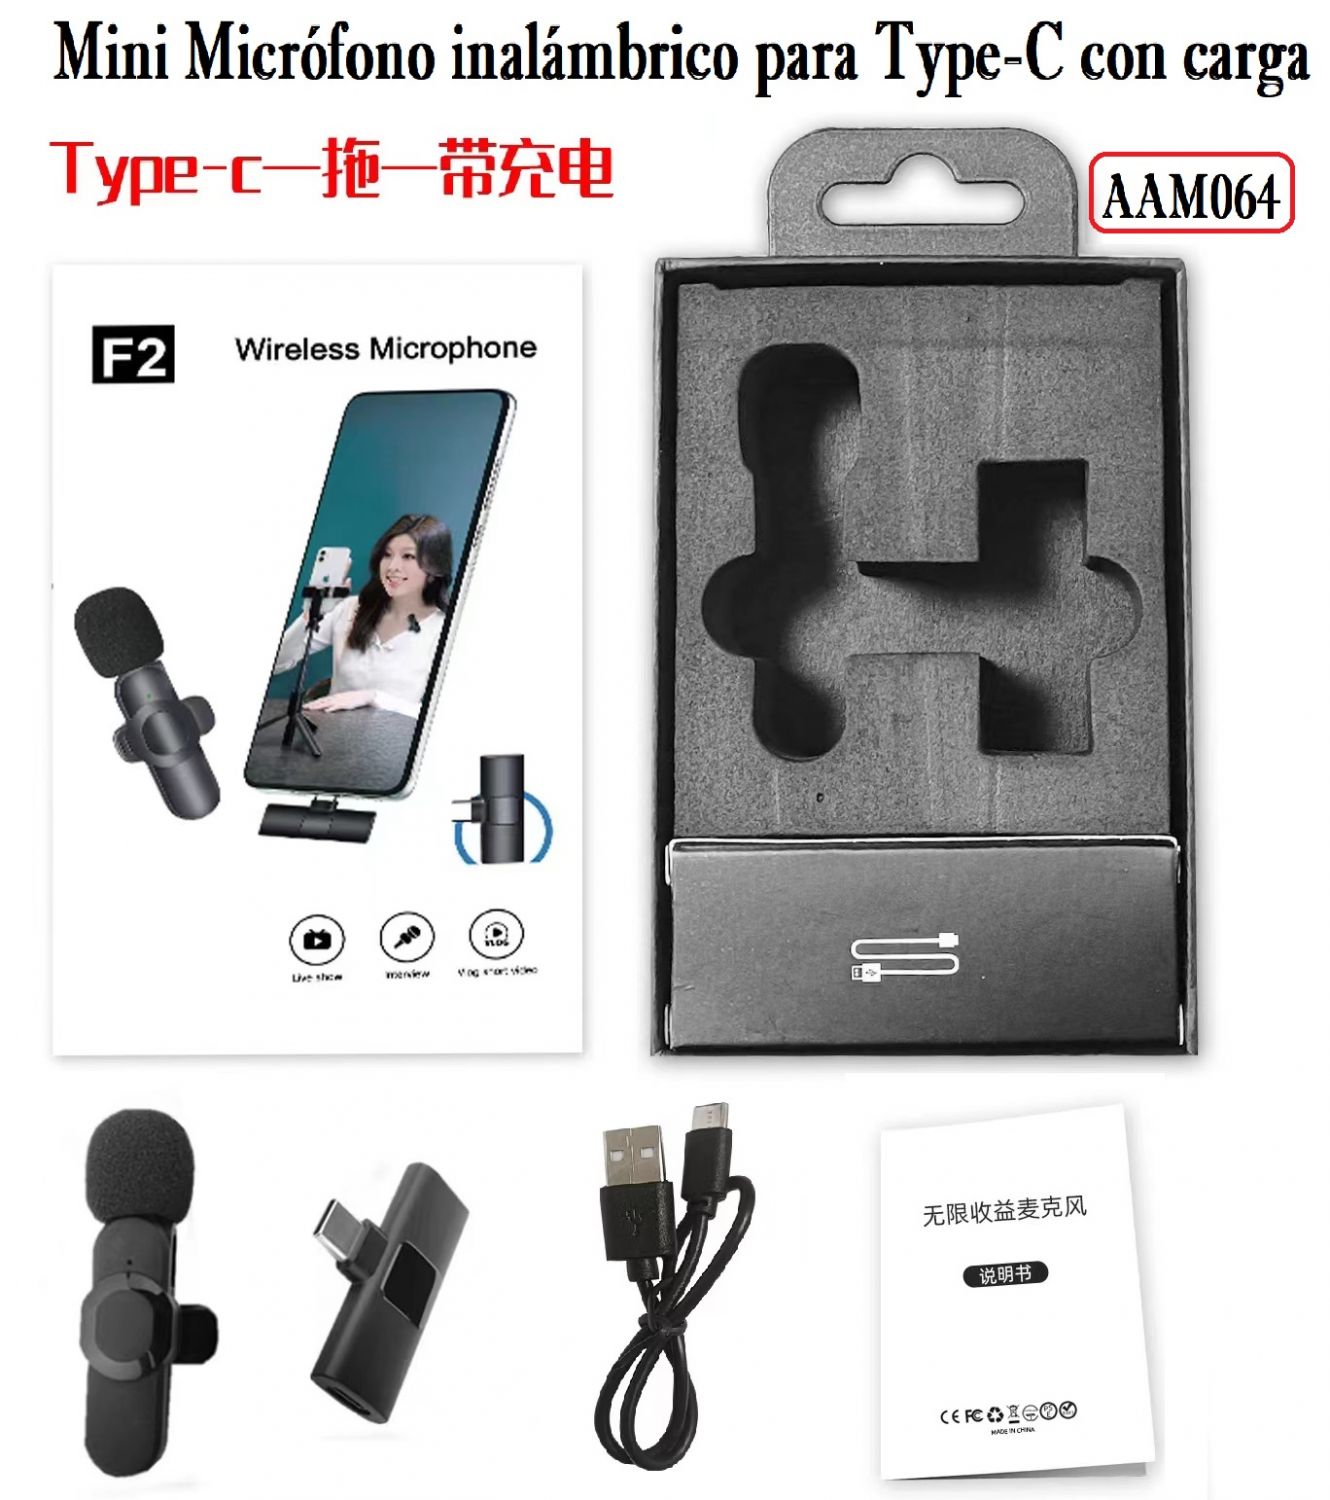 Micrófono inalámbrico Lavalier para Android/Type C con carga,AAM064